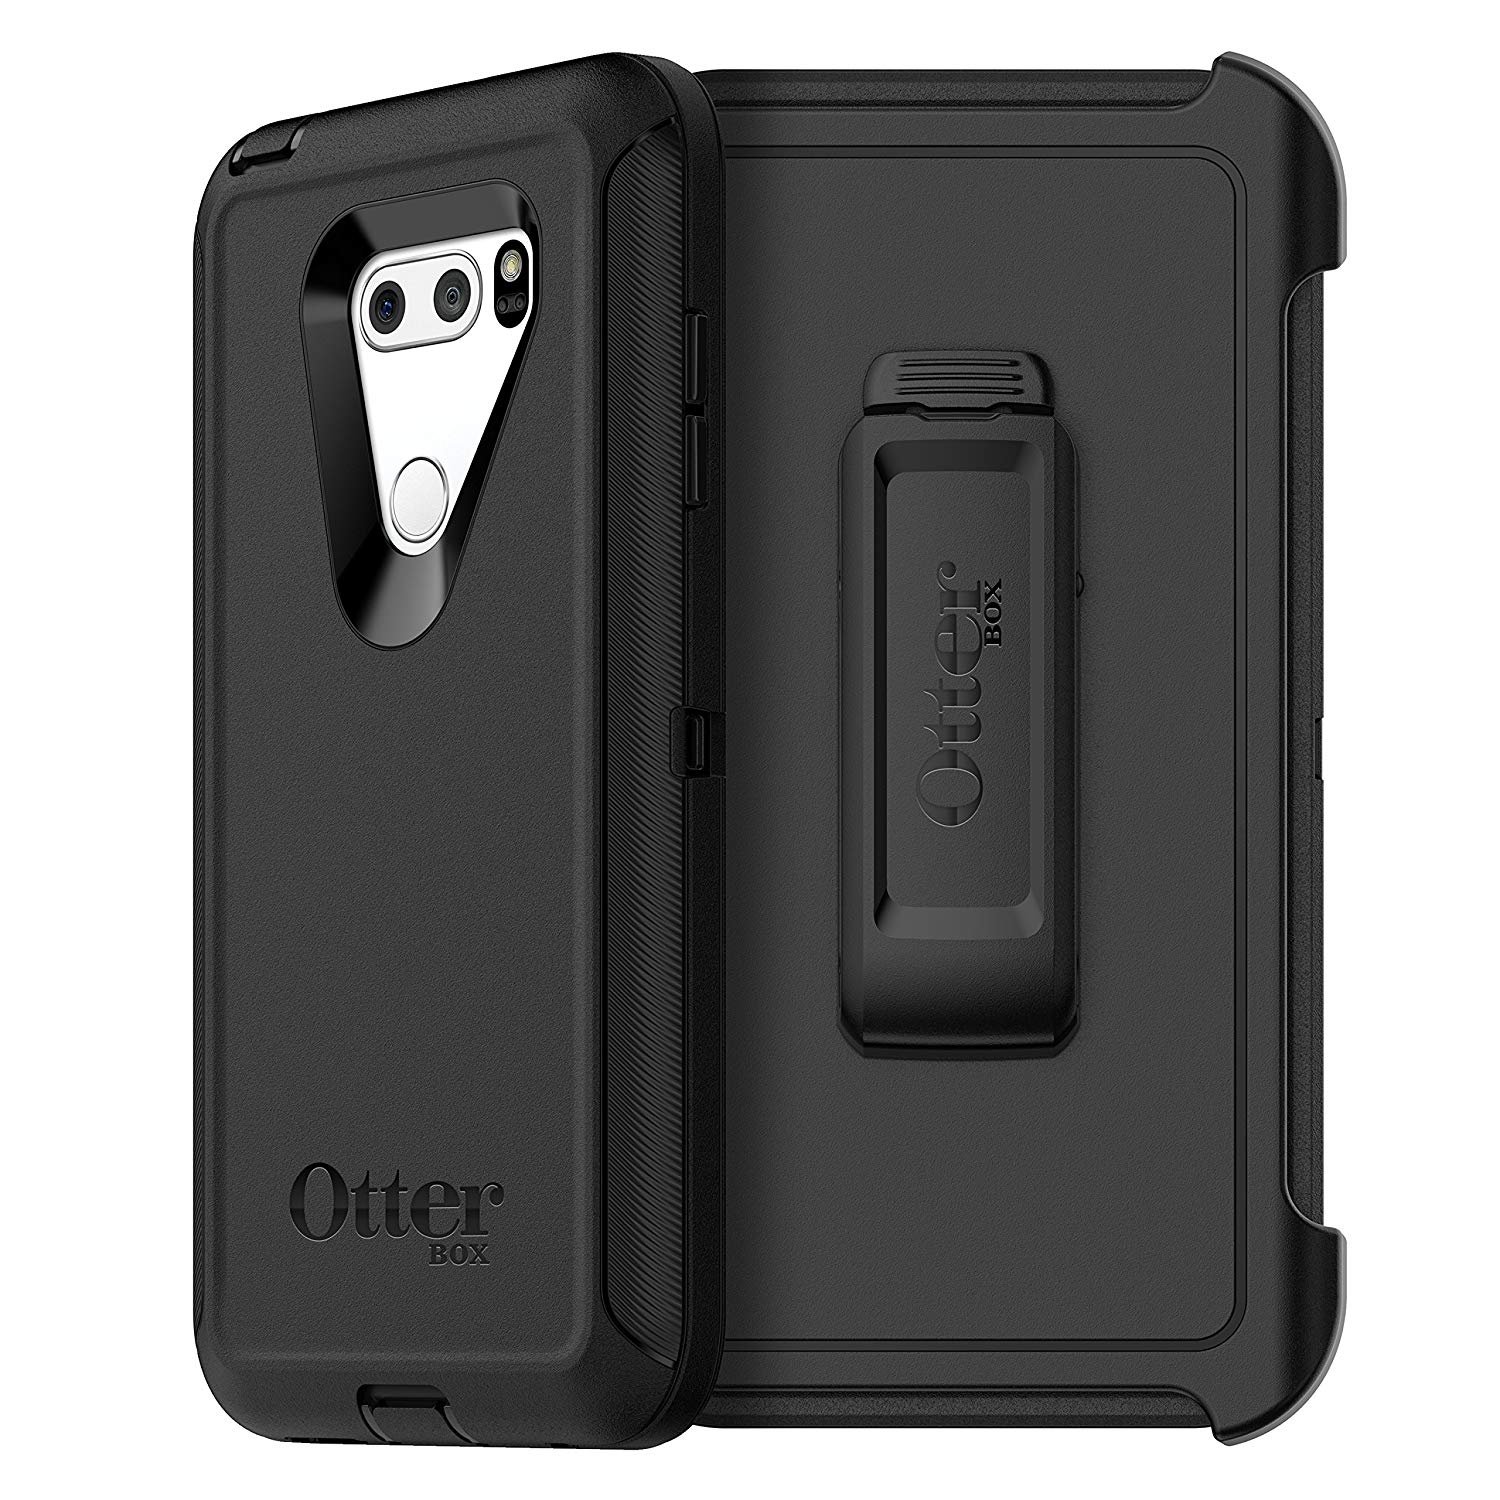 LG V30 cases - Otterbox